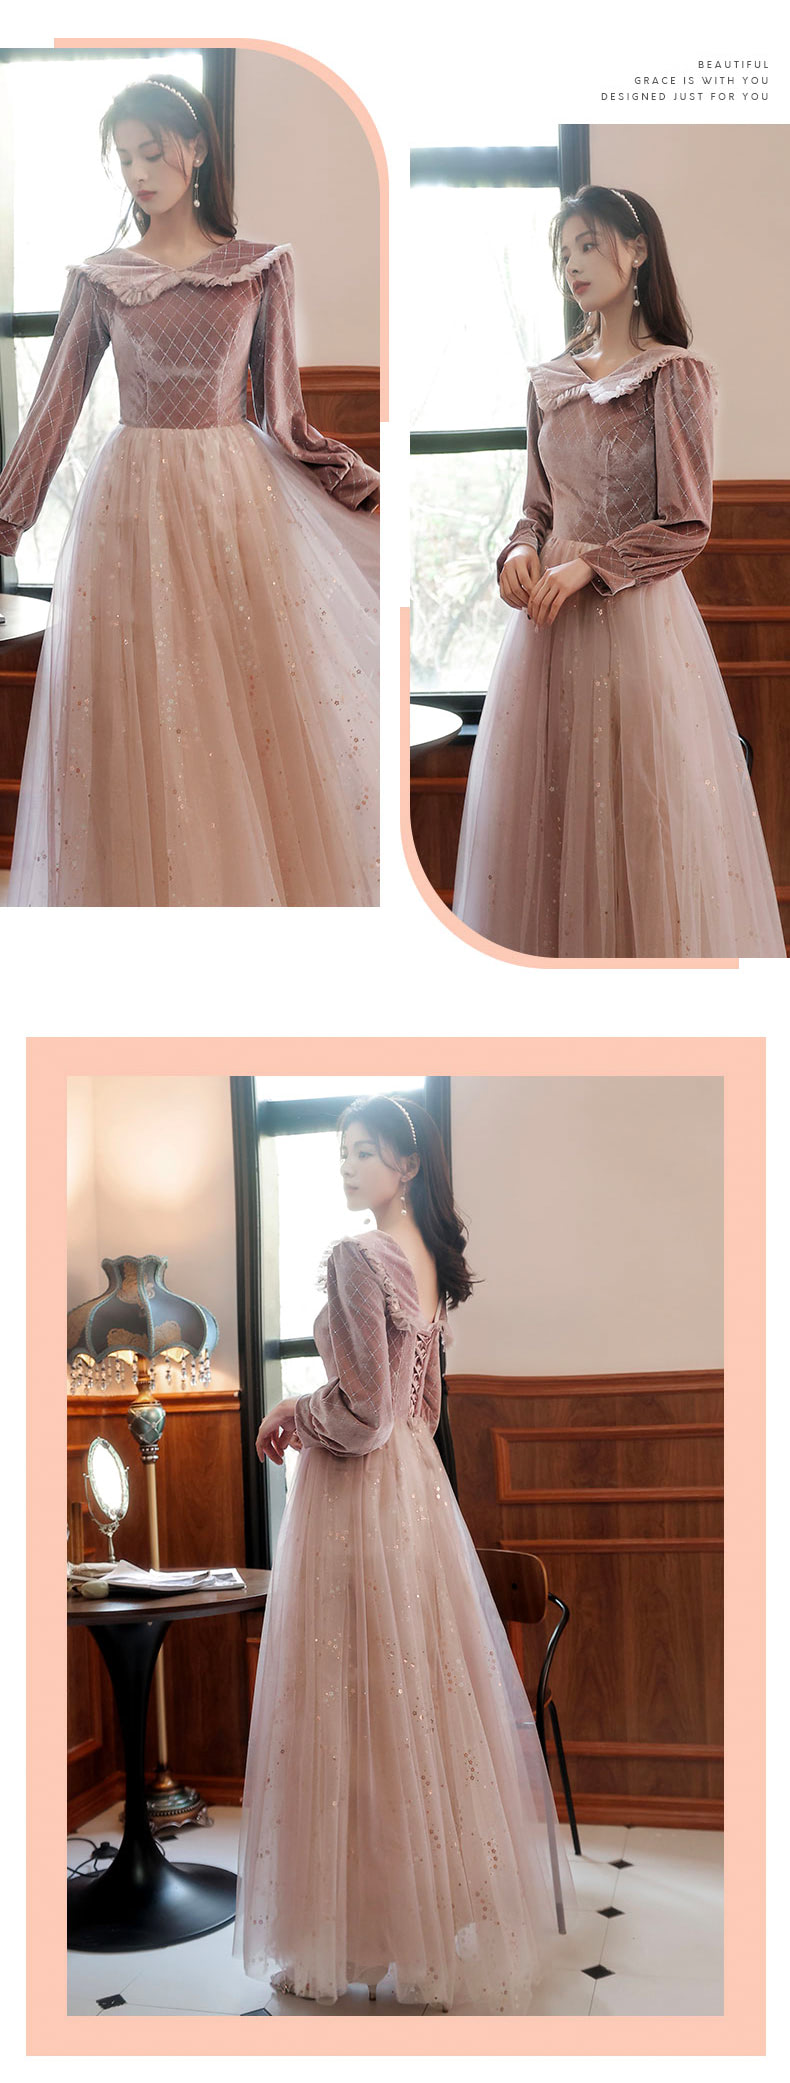 Fashion-Velvet-Cameo-Bridesmaid-Maxi-Dress-with-Long-Sleeves22.jpg